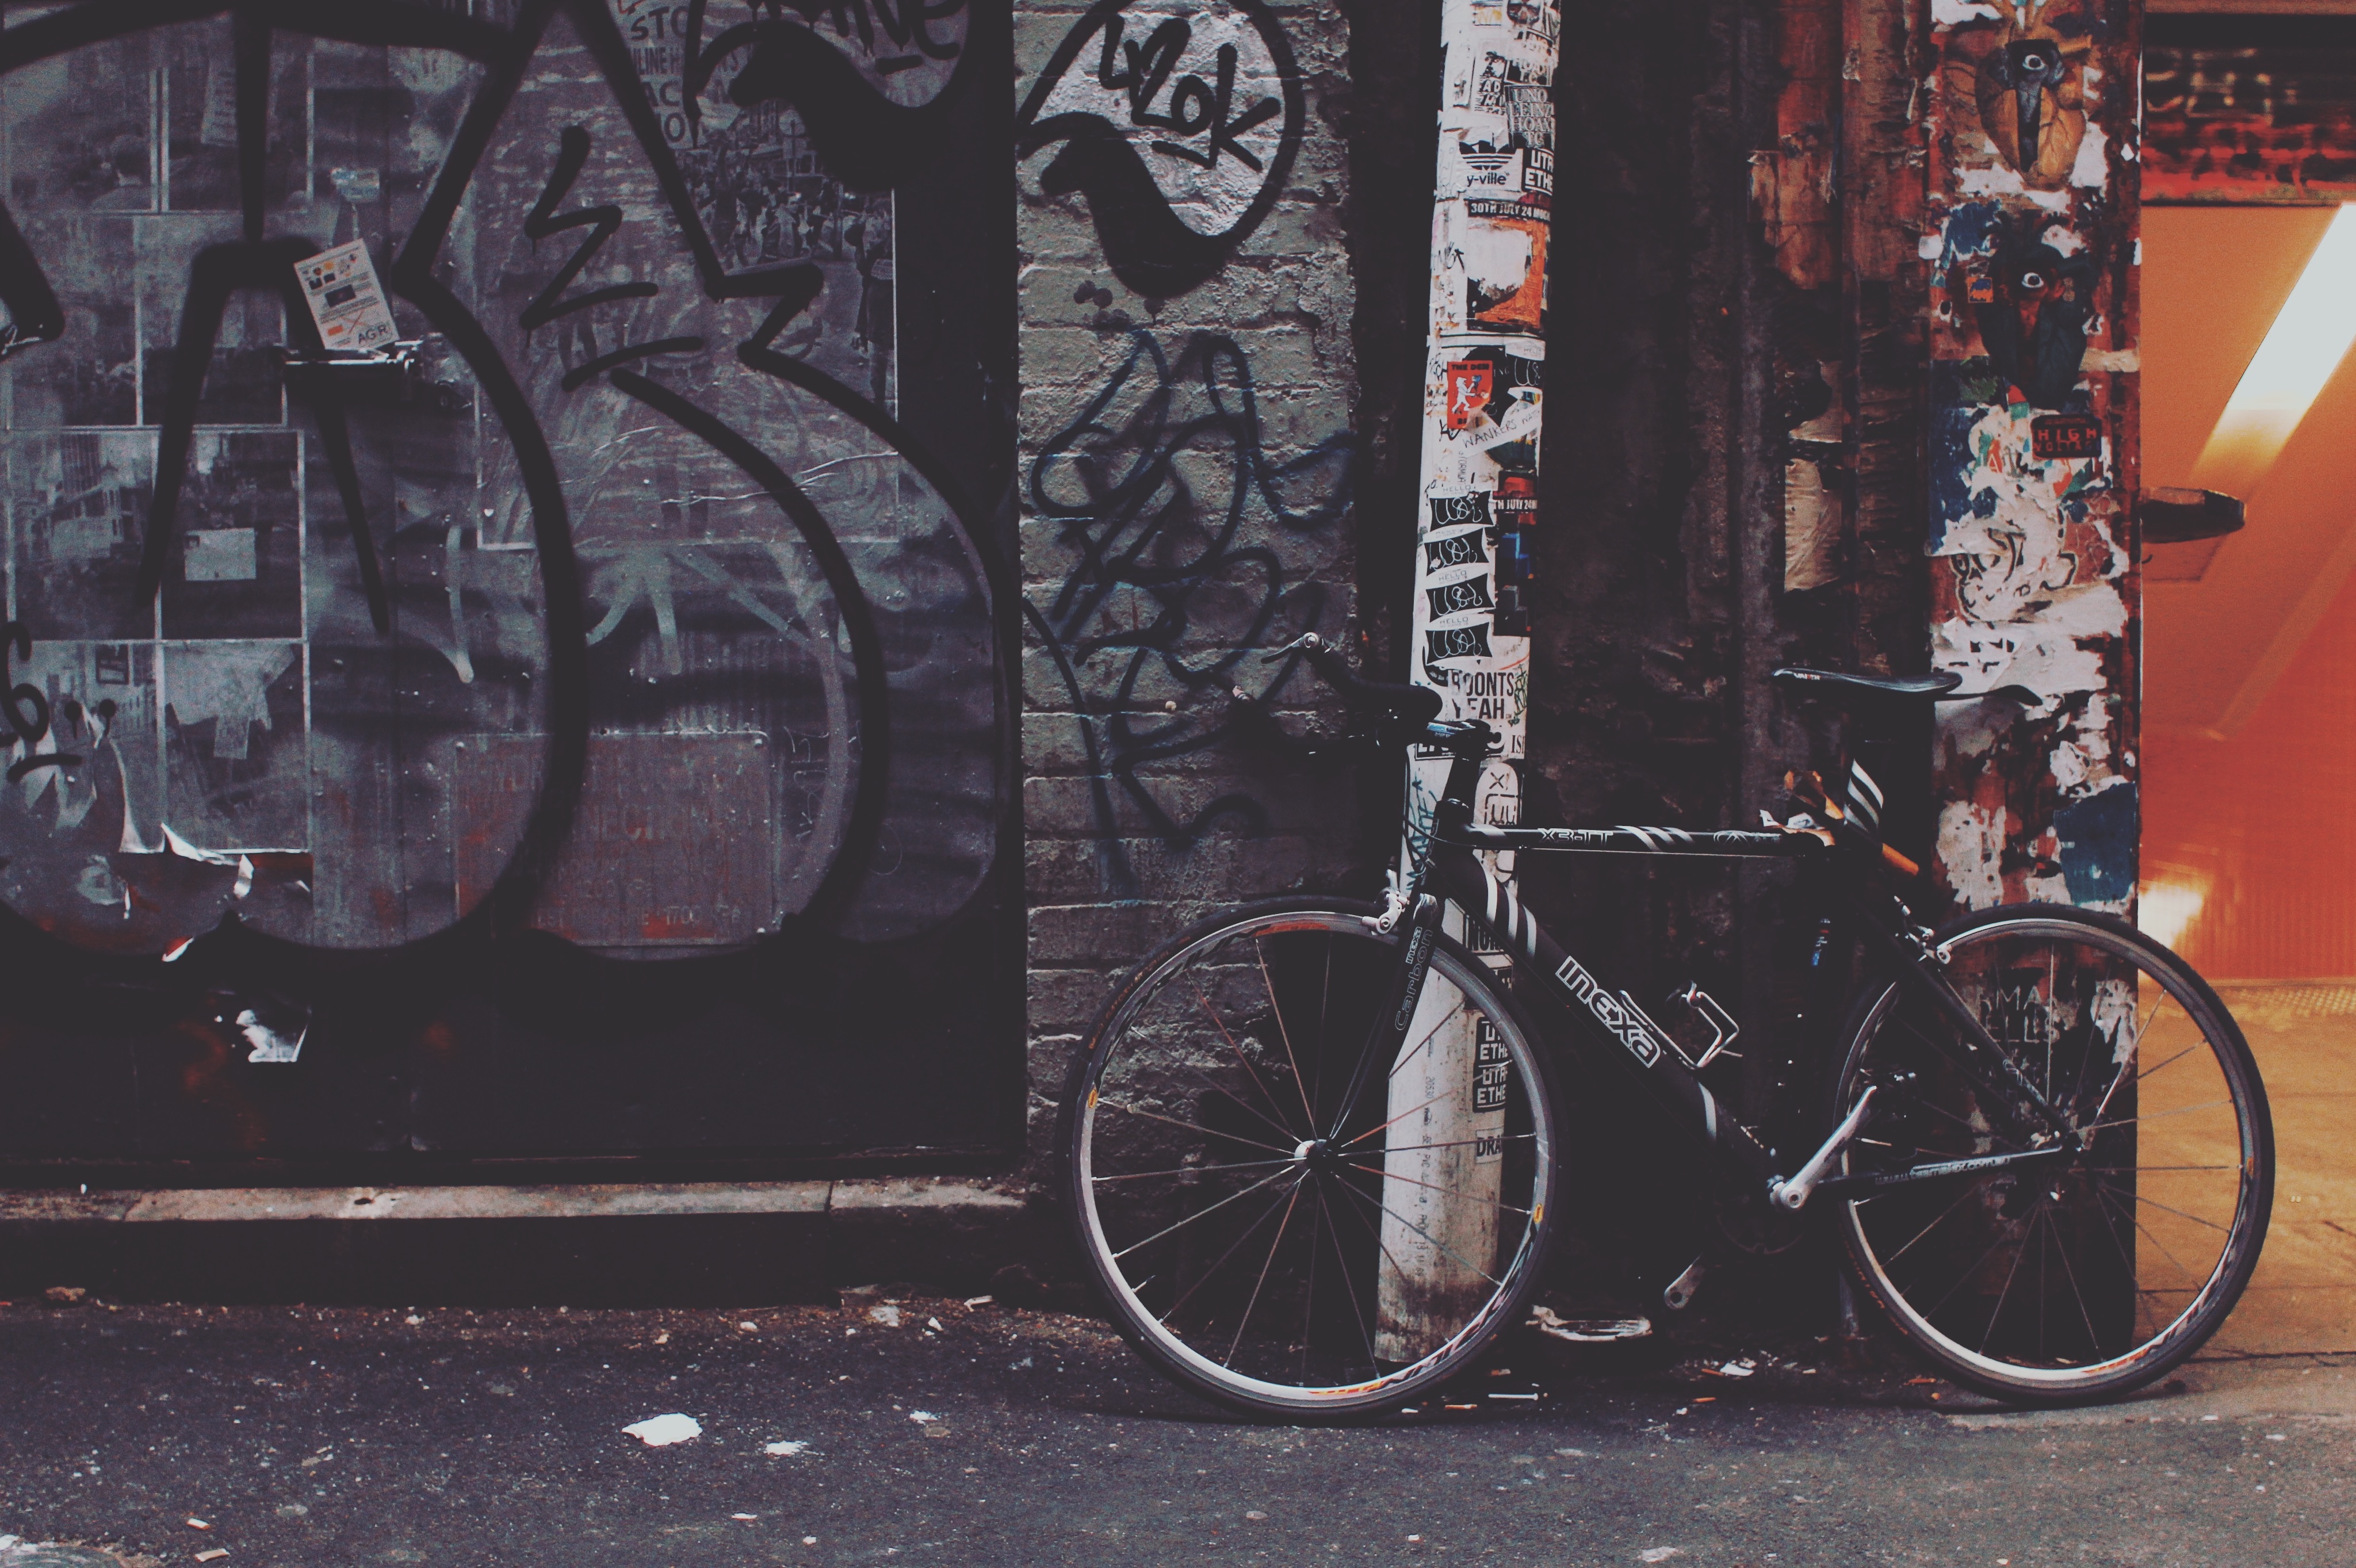 graffiti, miscellanea, miscellaneous, bicycle, courtyard, yard cellphone